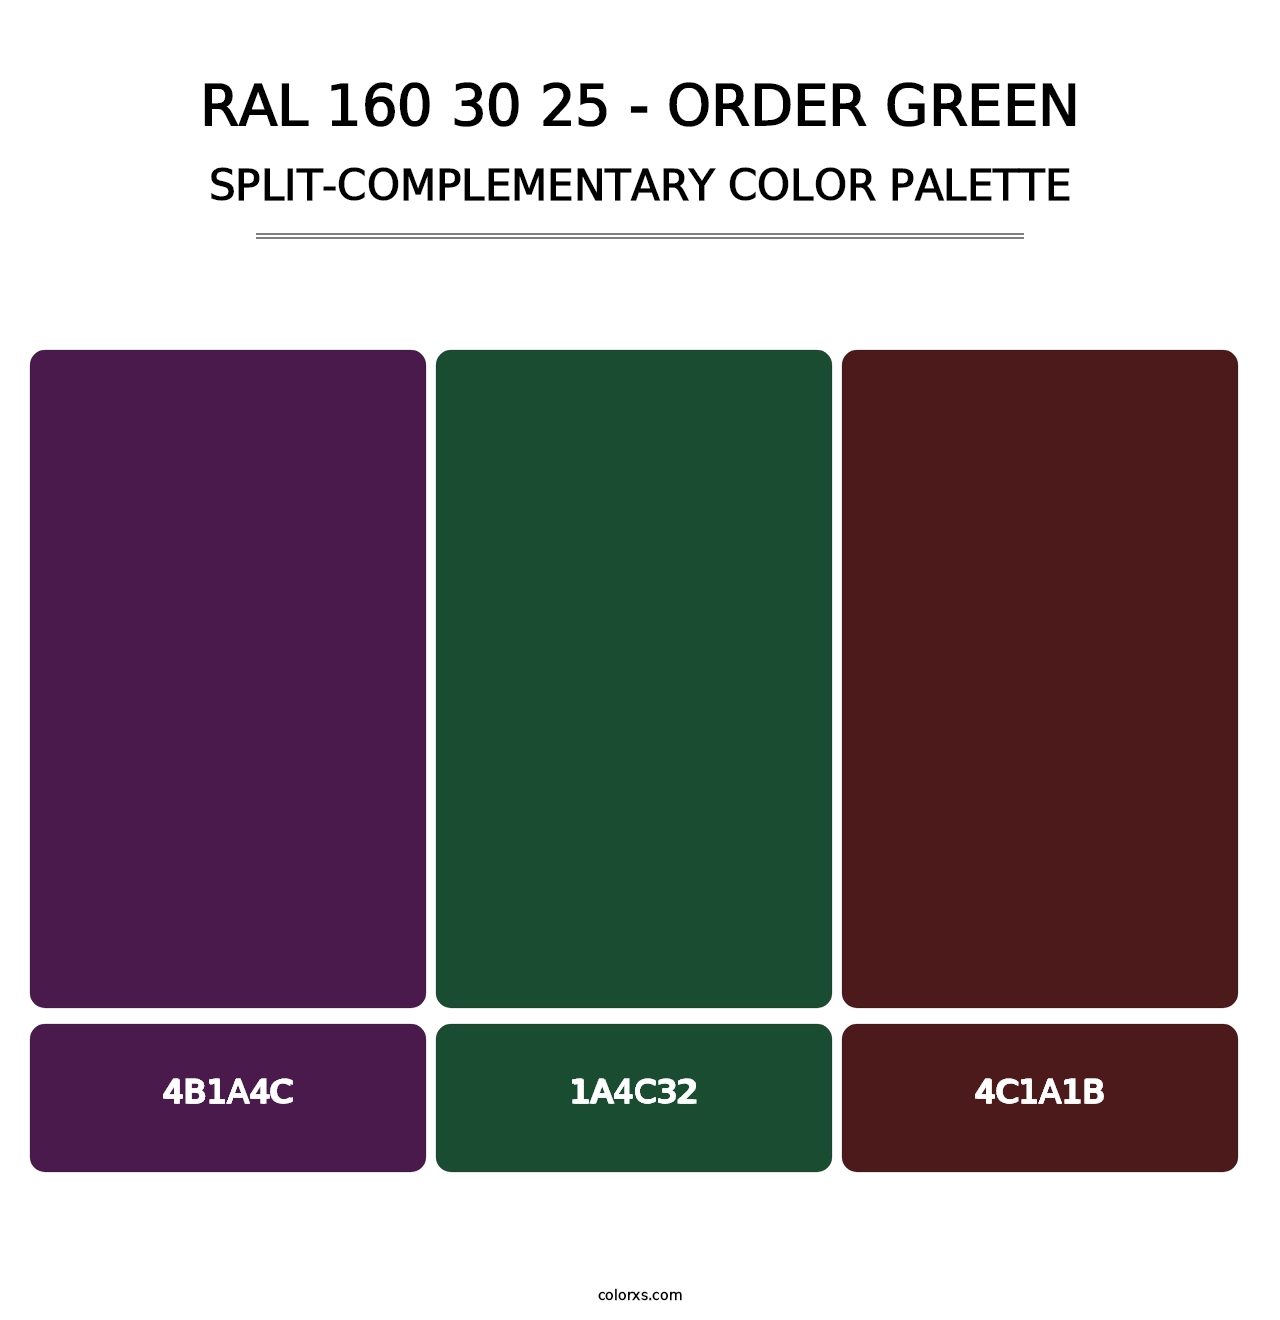 RAL 160 30 25 - Order Green - Split-Complementary Color Palette